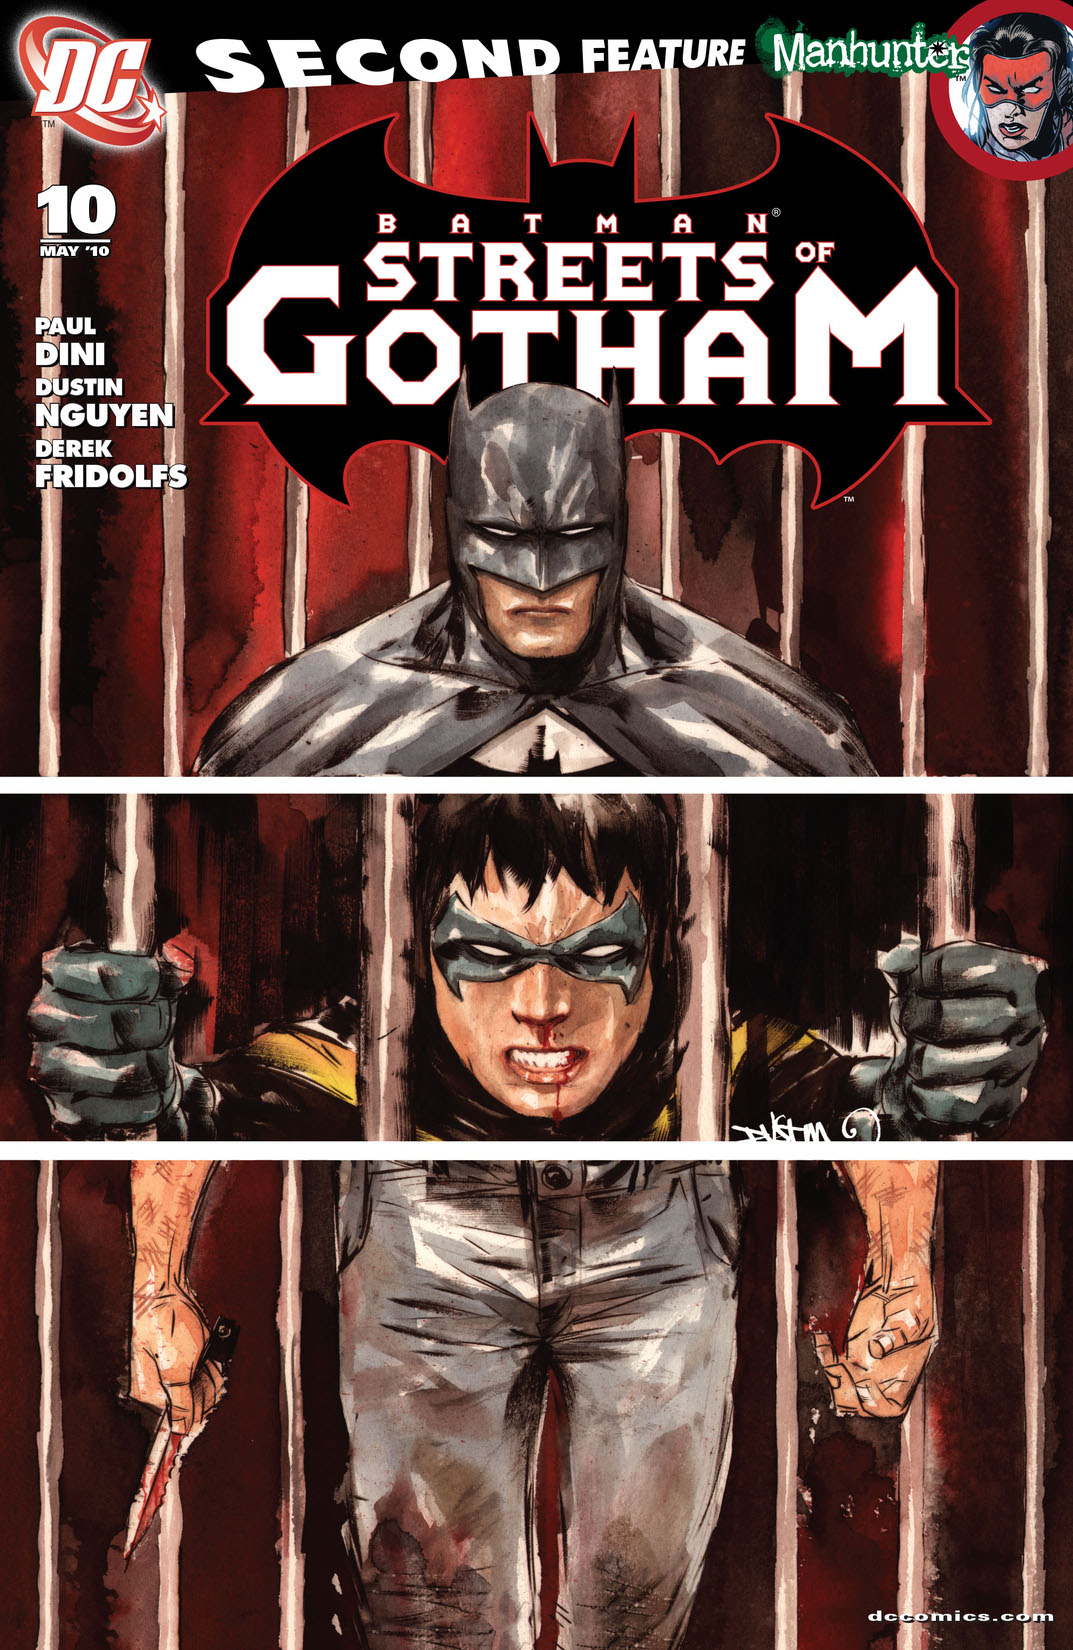 Batman: Streets of Gotham #10 preview images